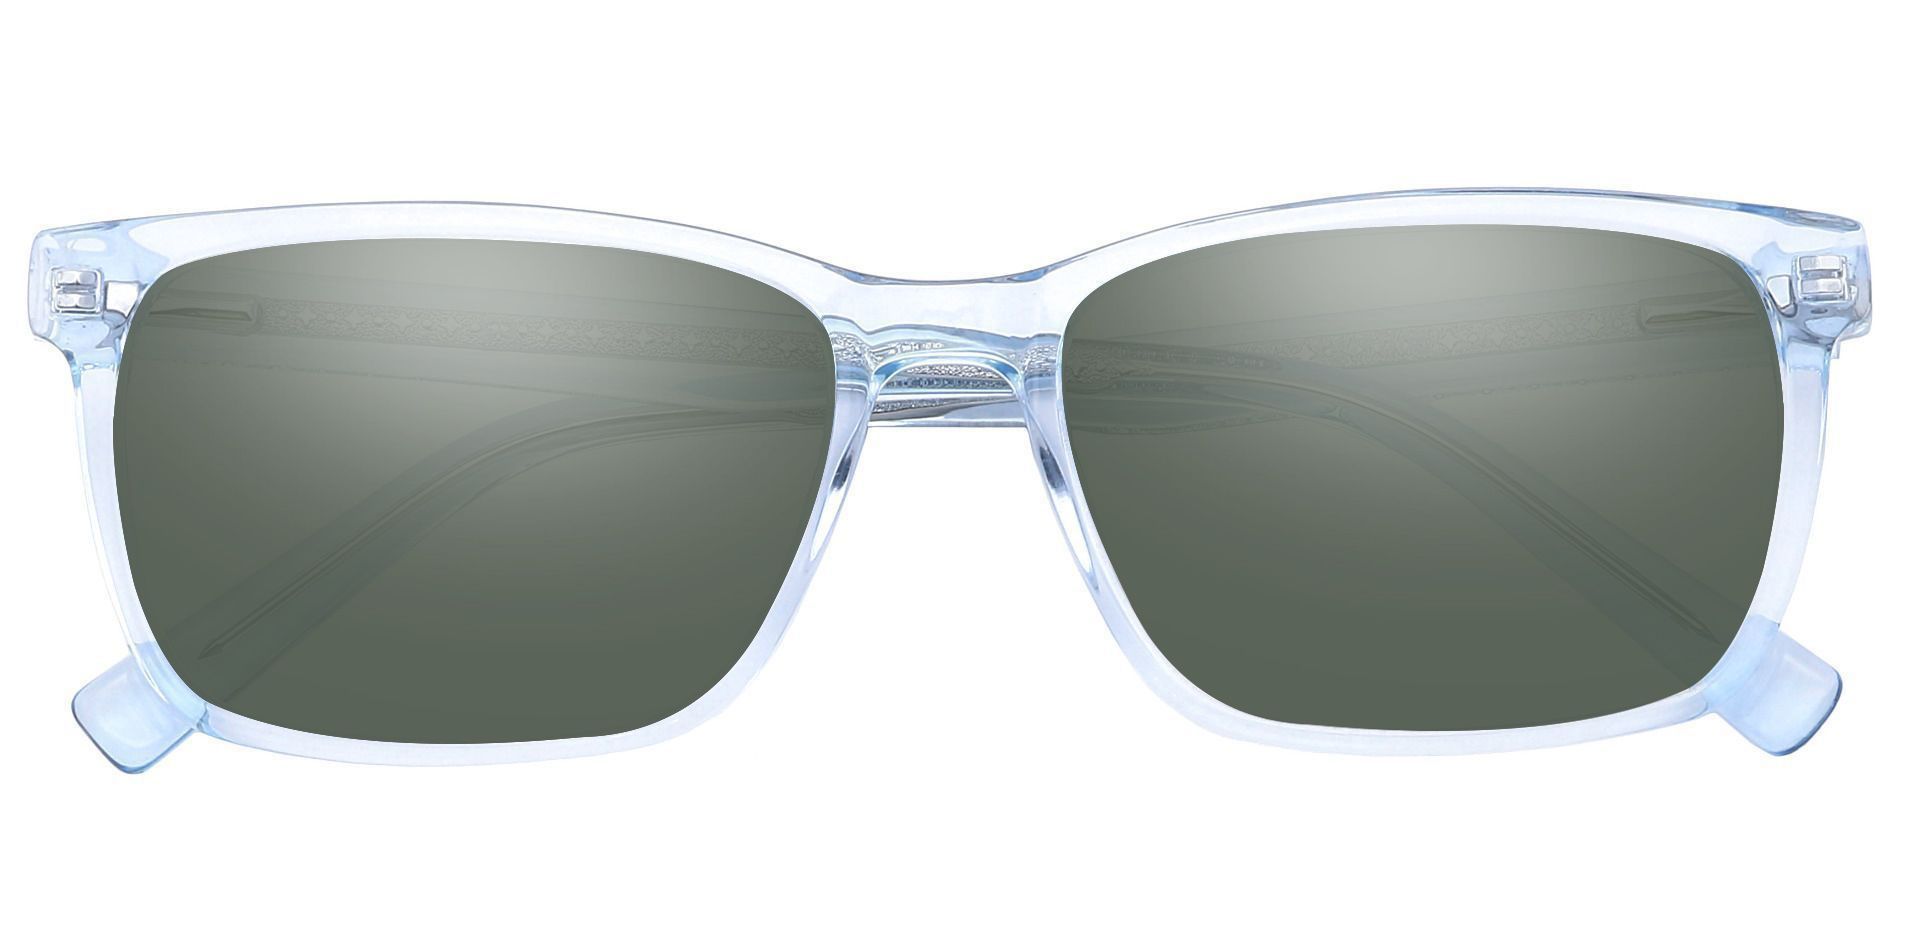 Galaxy Rectangle Prescription Sunglasses - Blue Frame With Green Lenses